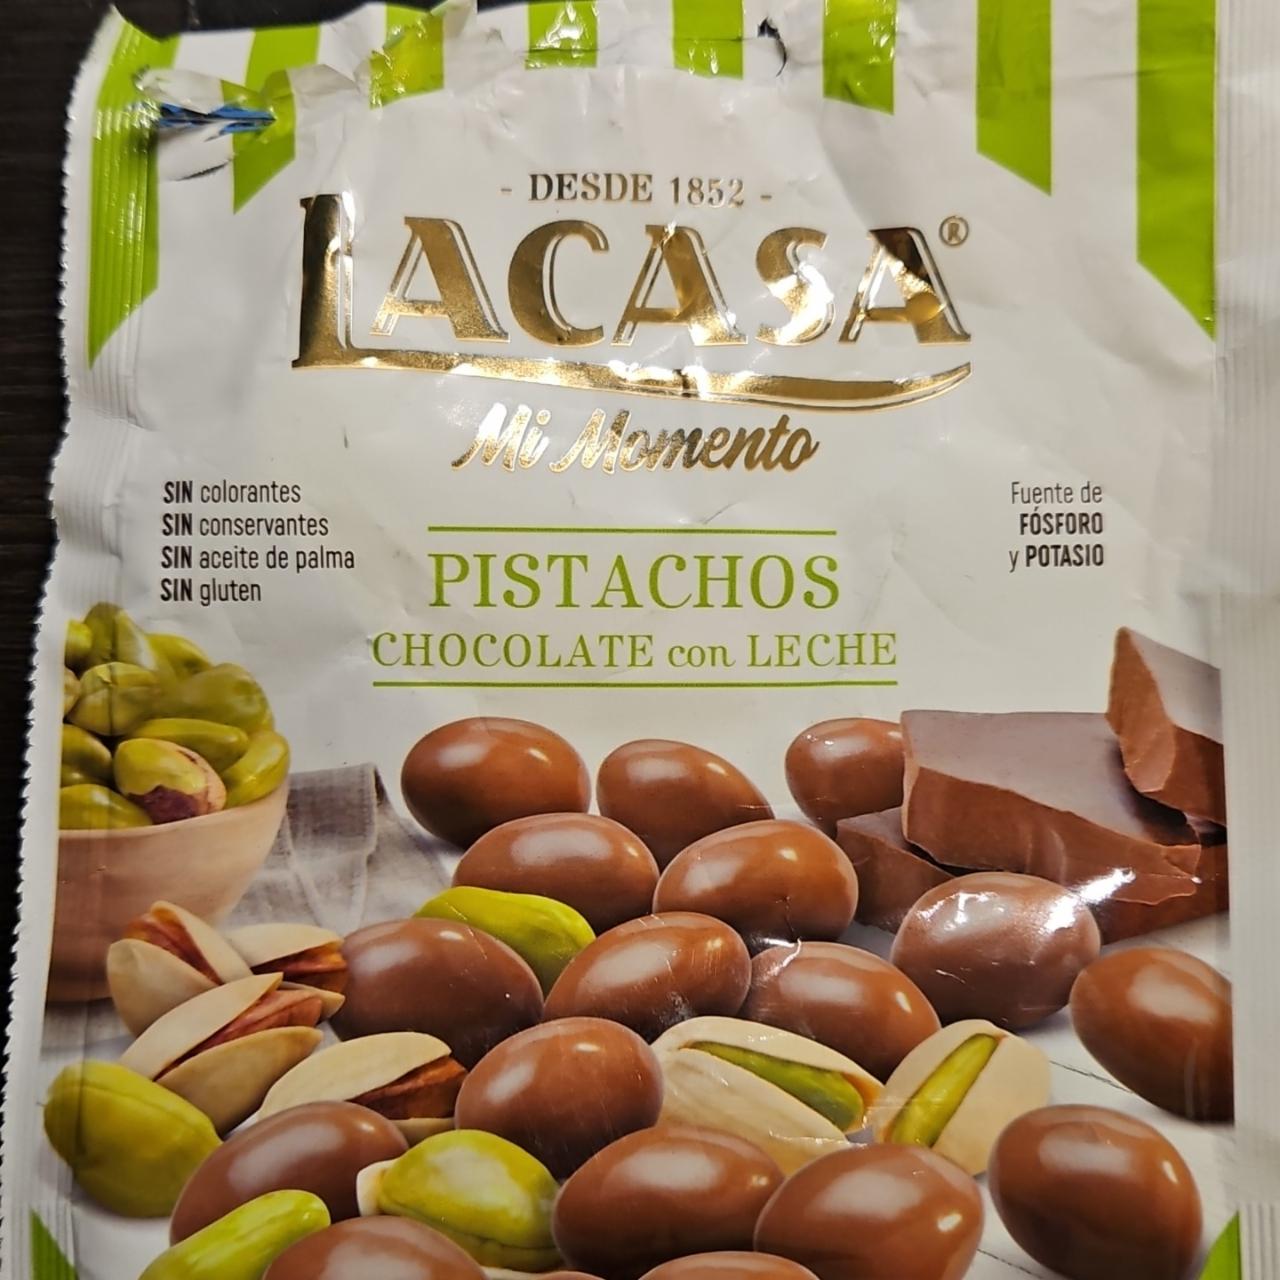 Fotografie - Pistachos chocolate con leche Lacasa